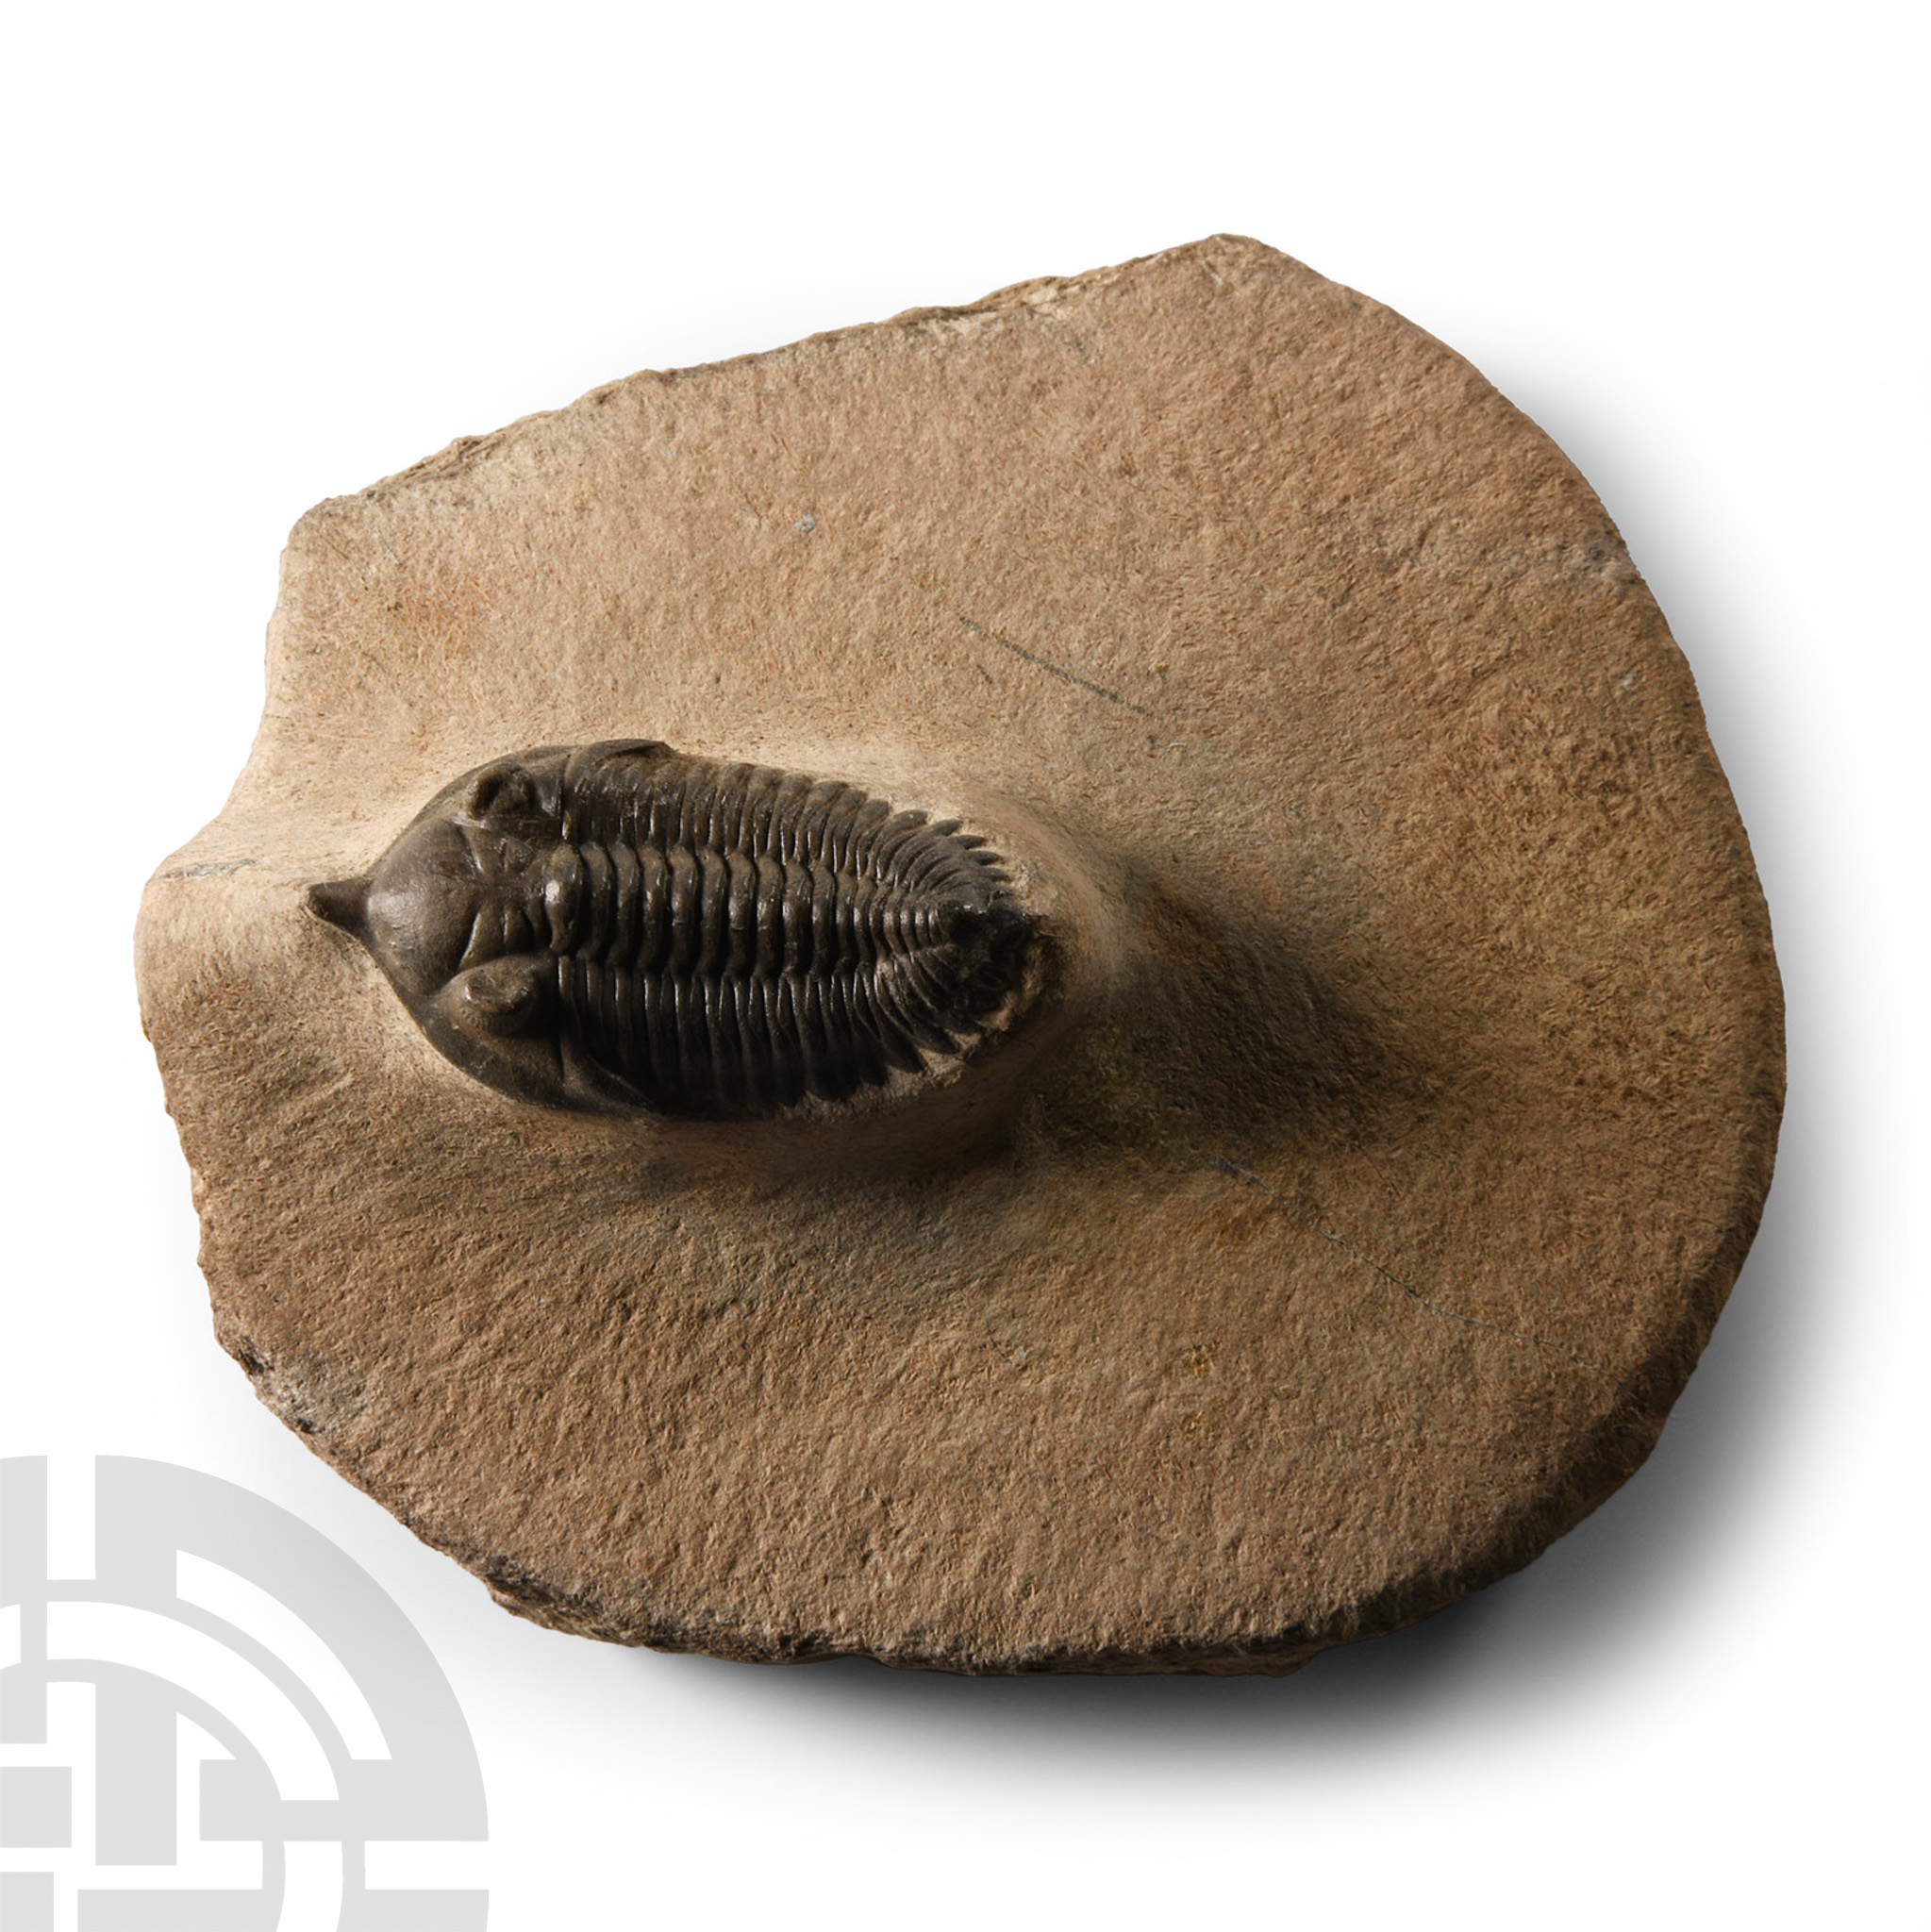 Natural History - Fossil Morroccanites Trilobite